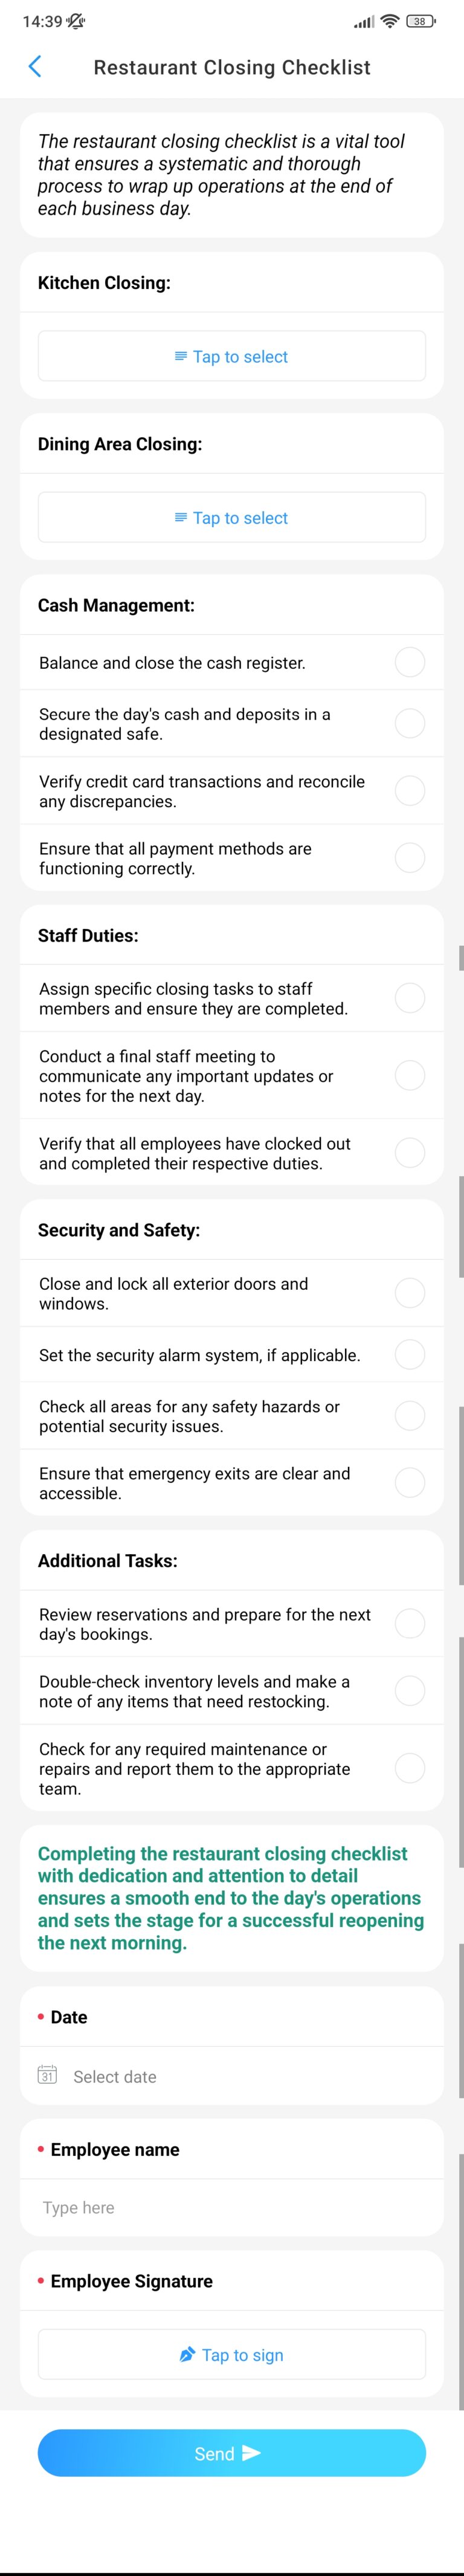 Restaurant Closing Checklist screenshot